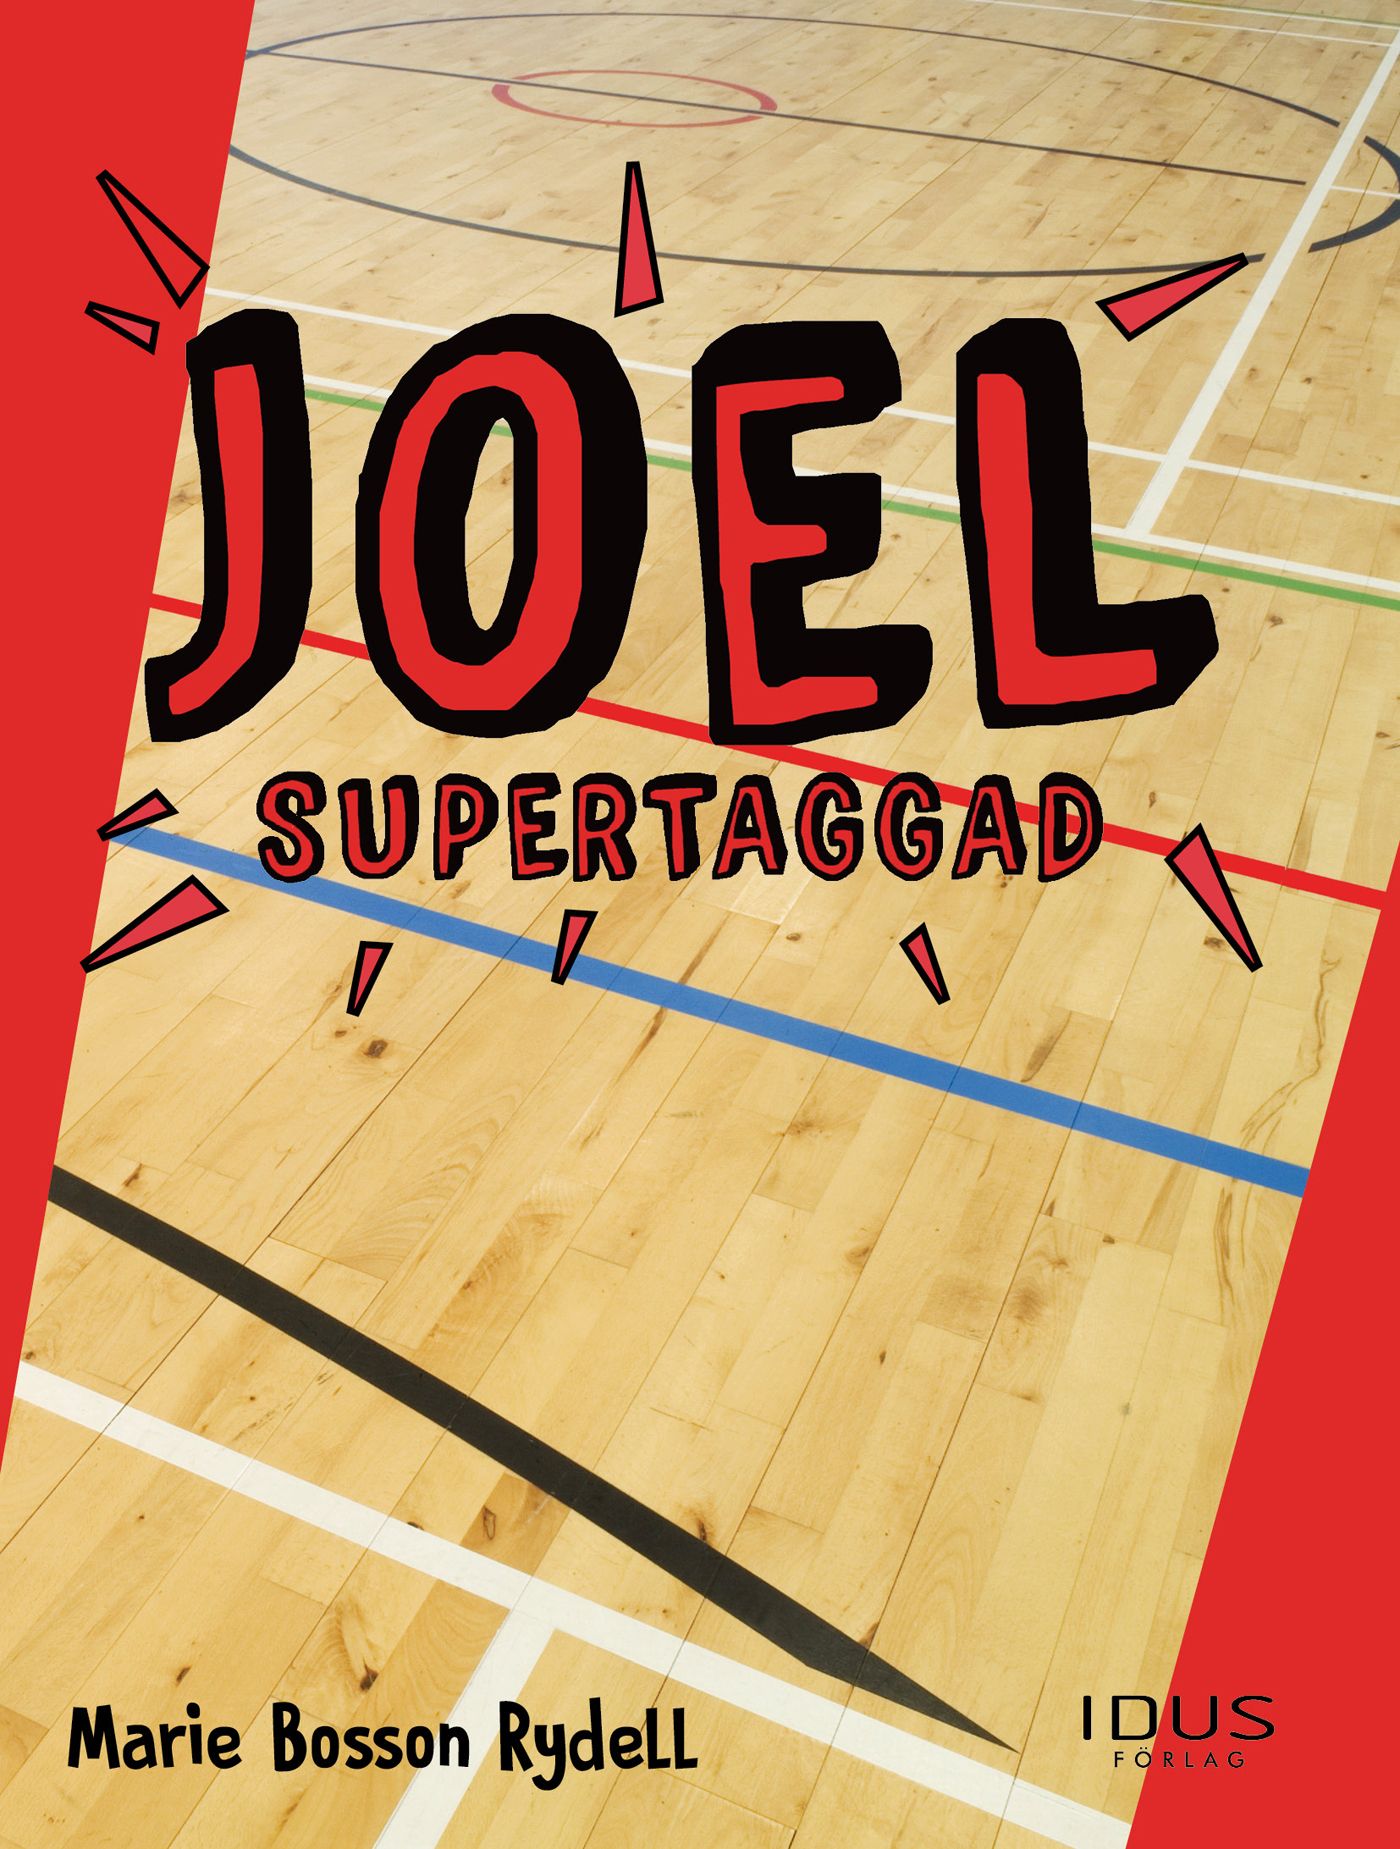 Joel - Supertaggad, e-bok av Marie Bosson Rydell